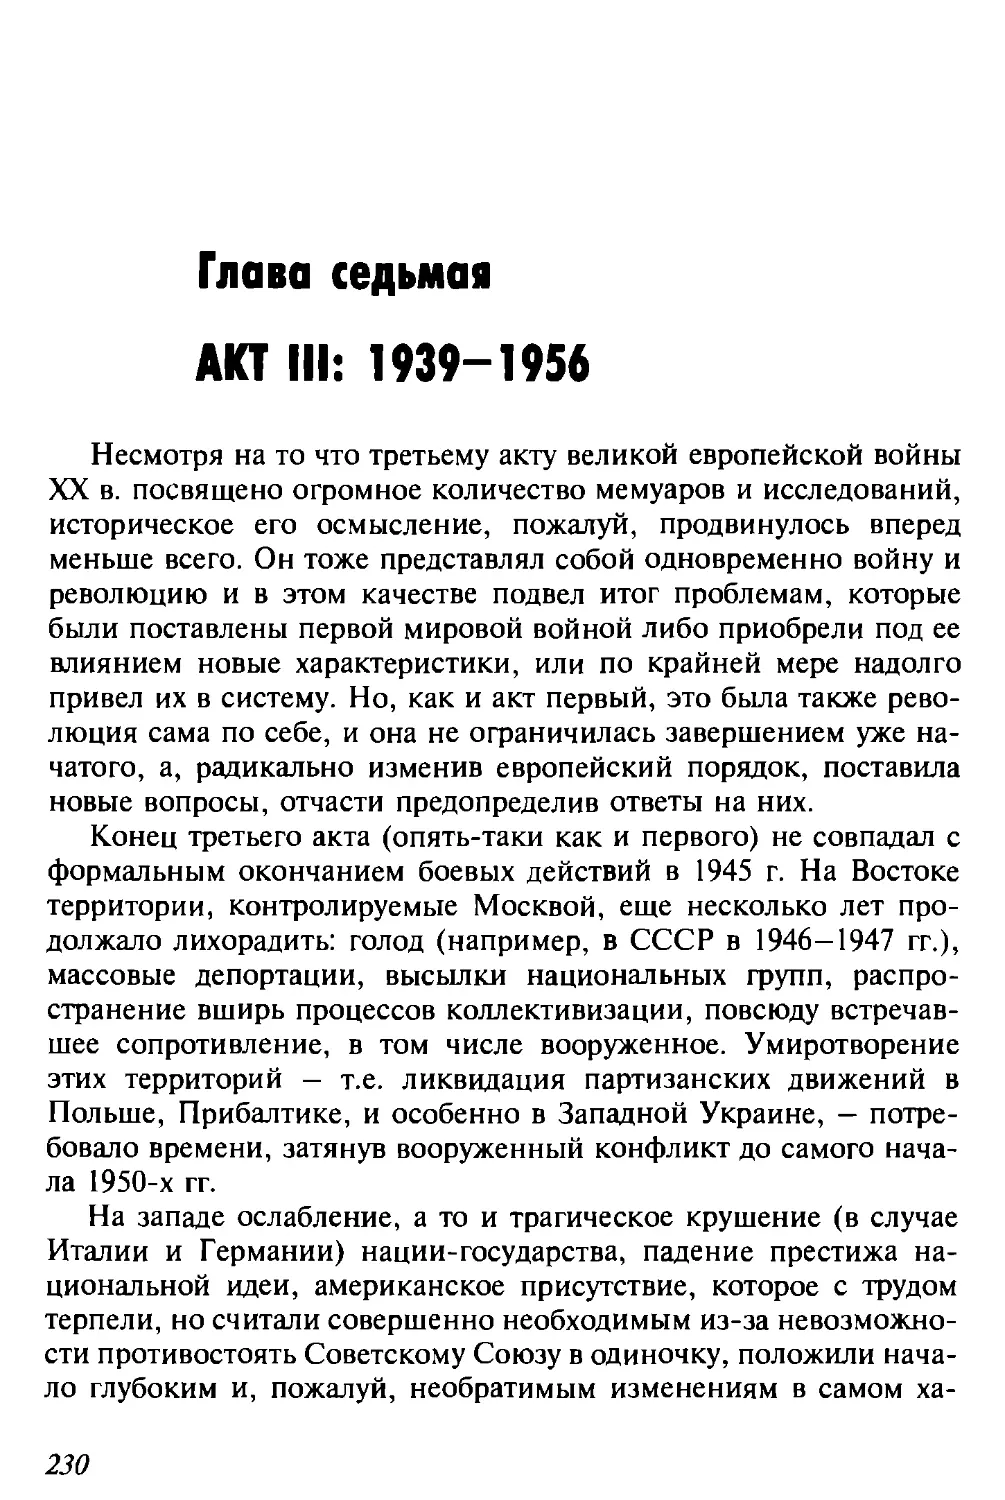 Глава седьмая. Акт III: 1939-1956